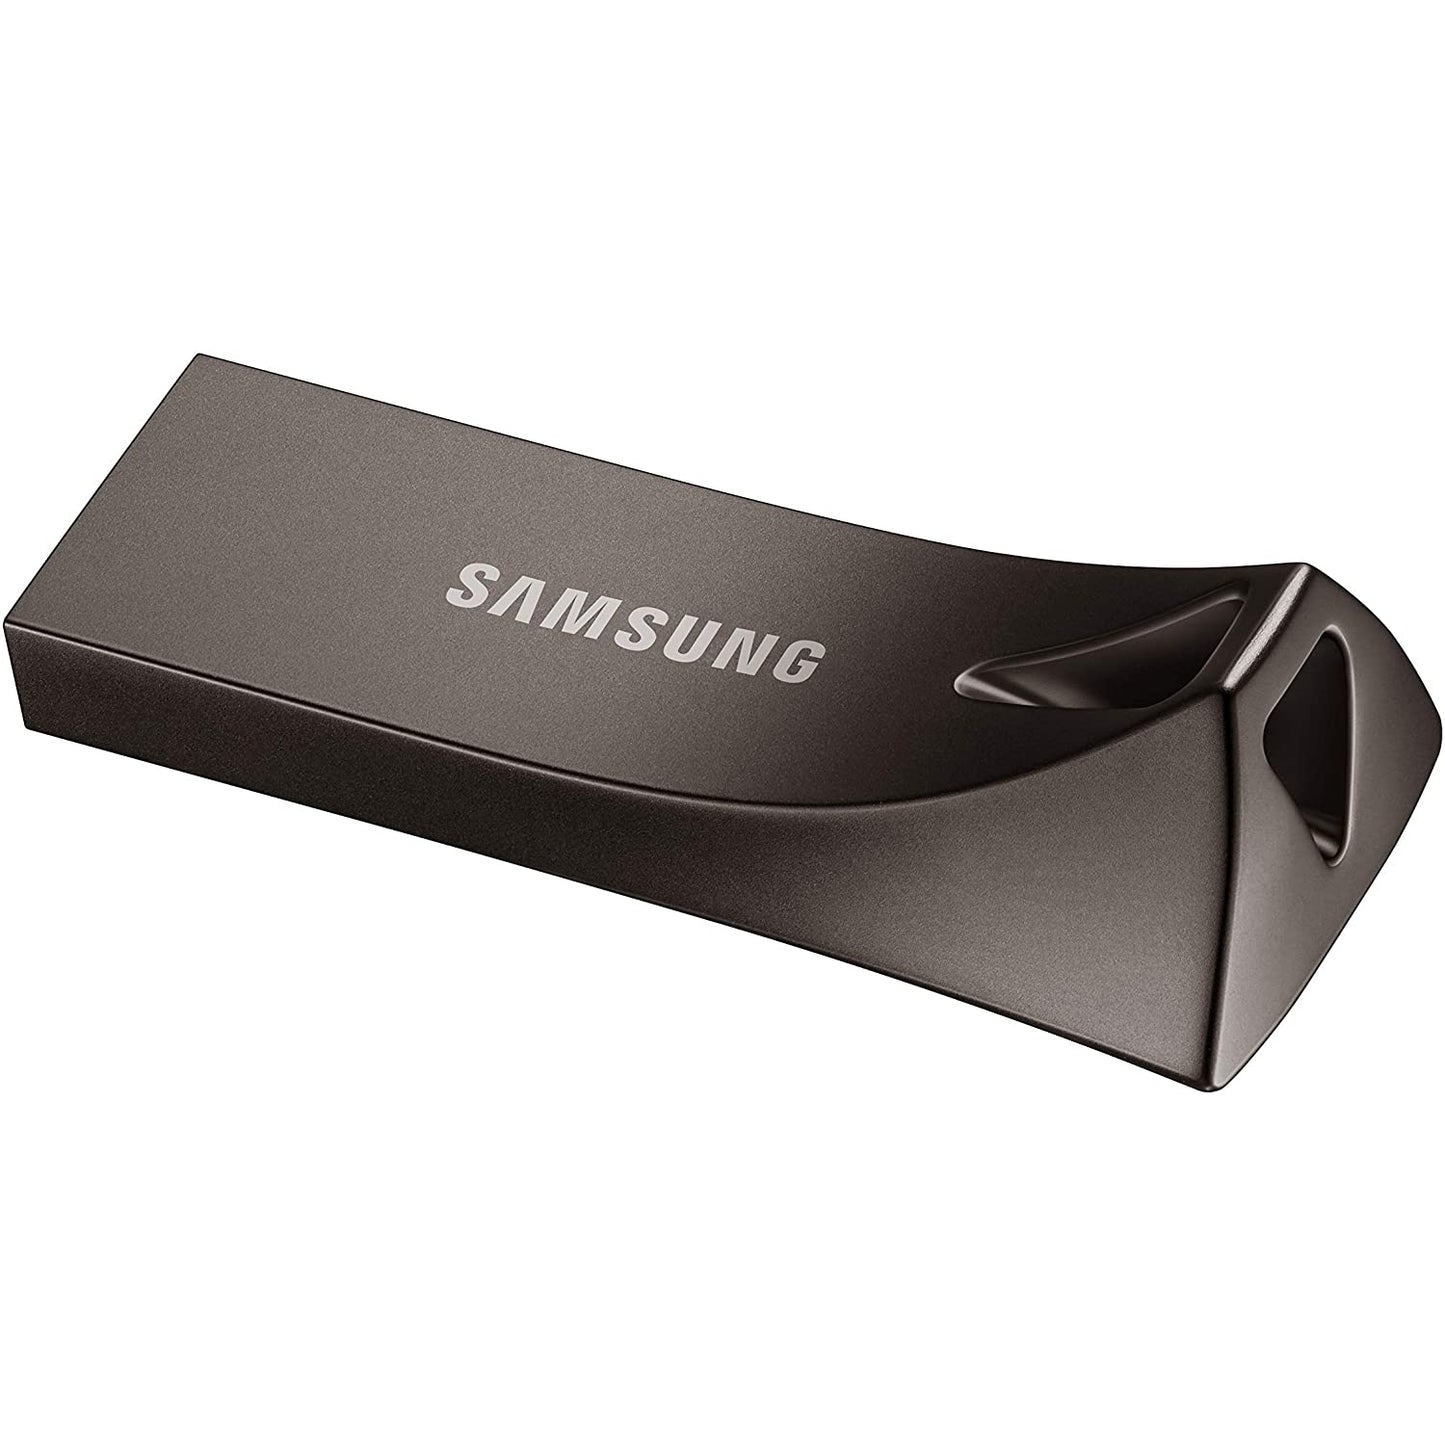 Samsung BAR Plus 256GB Titan Grey USB 3.1 Flash/Pen Drive/ Memory Stick 300MB/s Read MUF-256BE4/APC